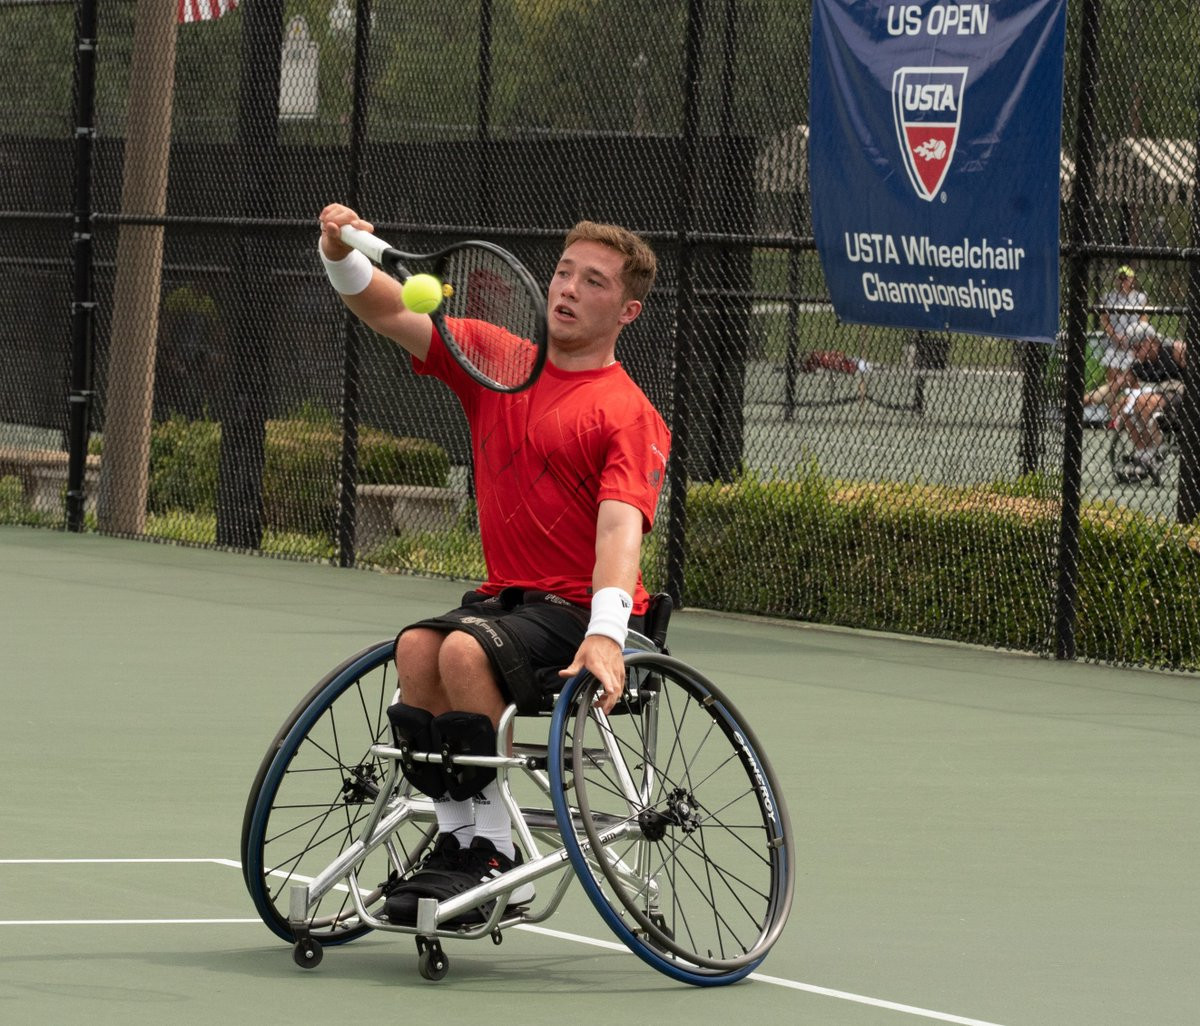 Houdet and Peifer win US Open Wheelchair Championships Super Series men’s doubles final